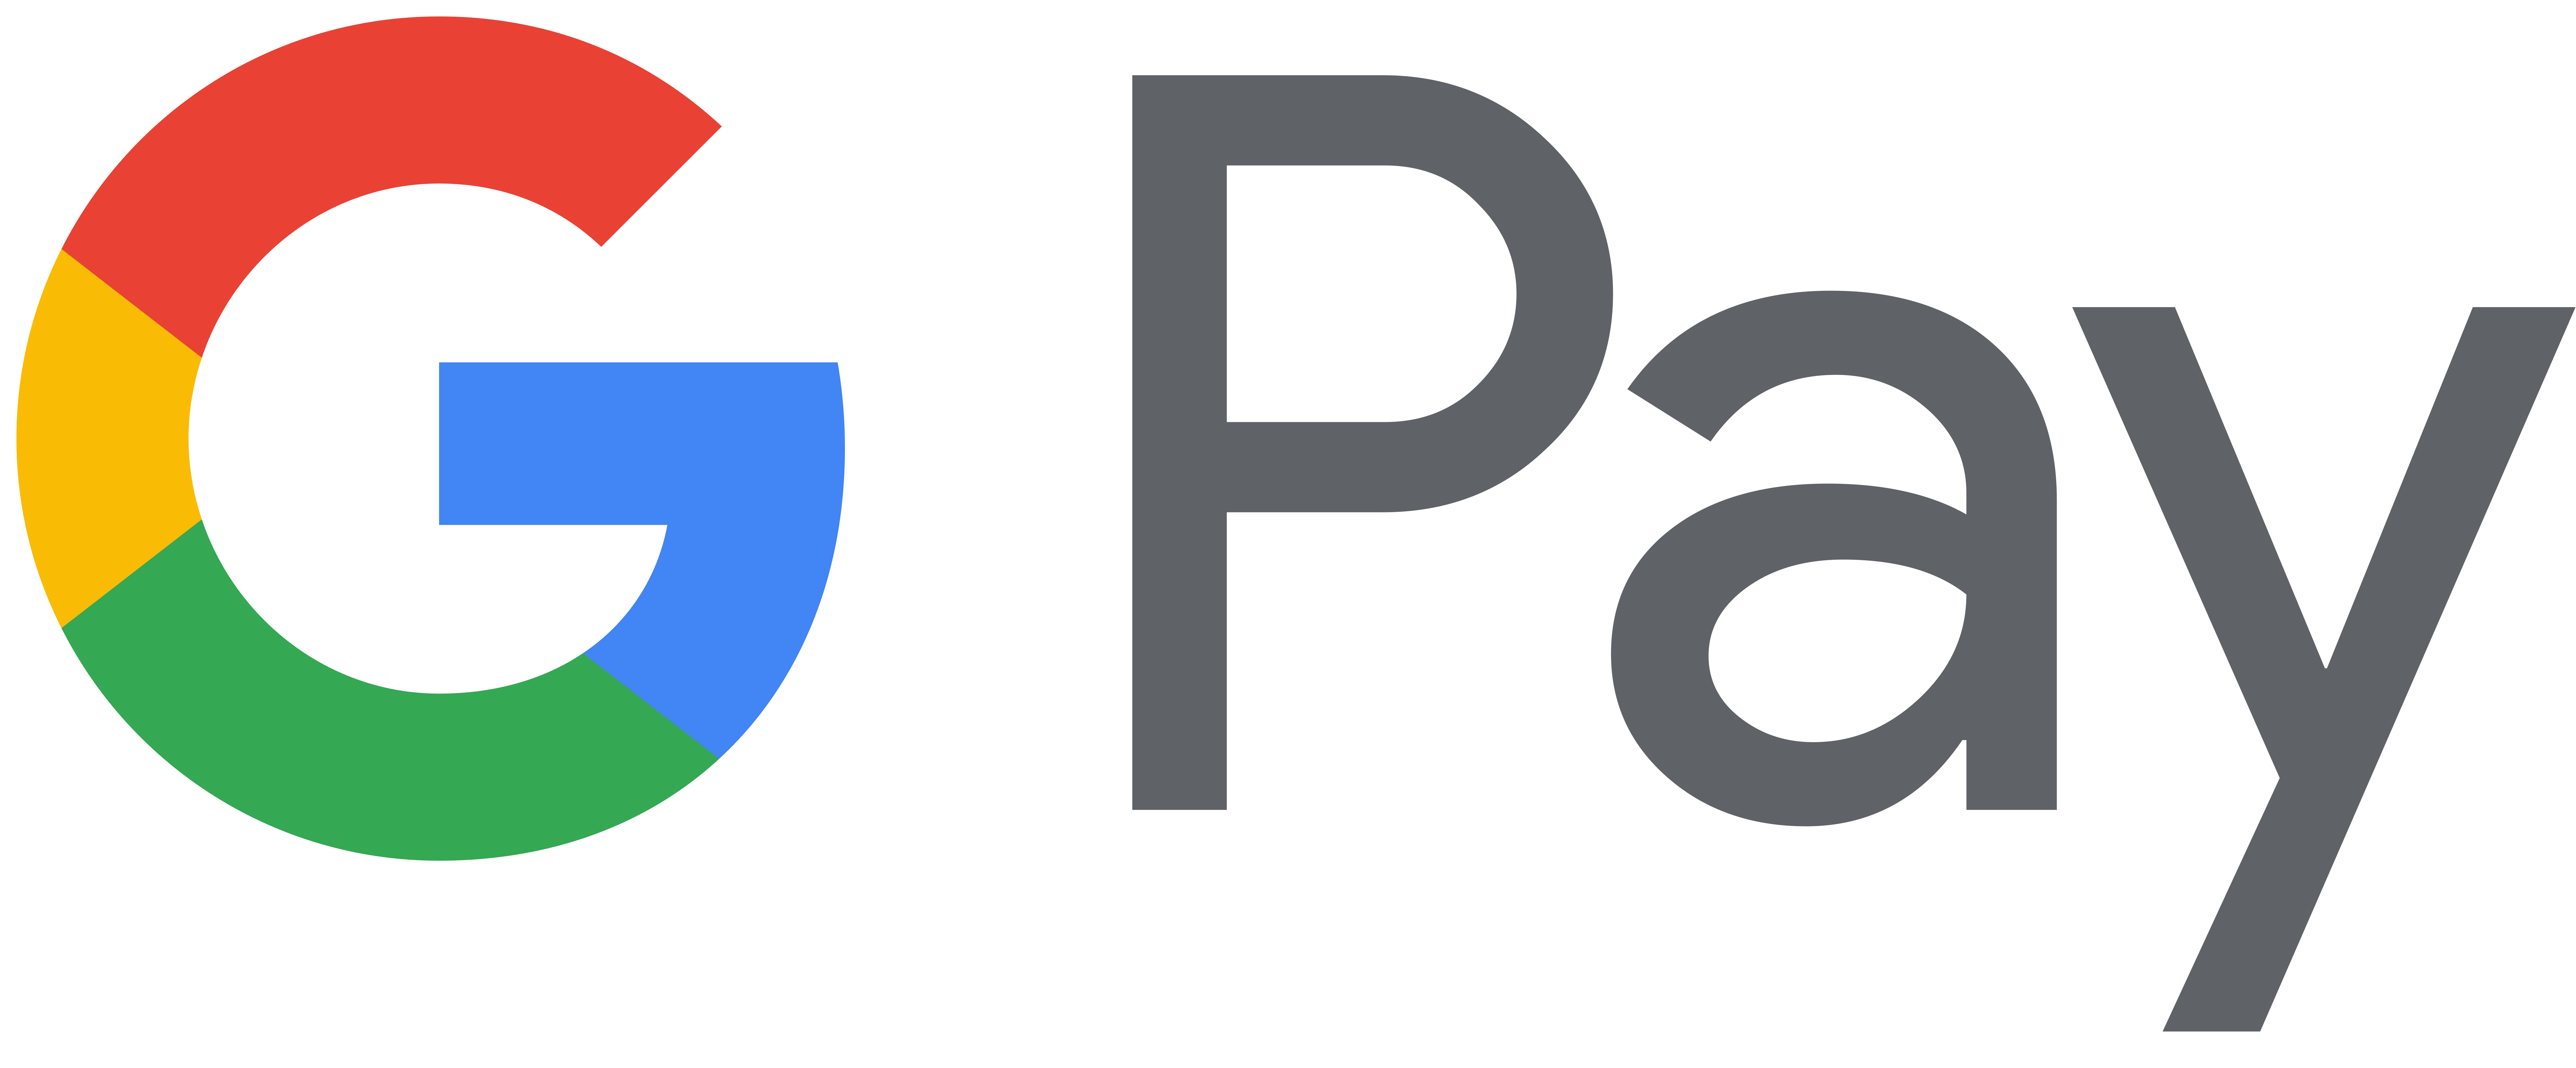 Web Imagem do Google Logo PNG